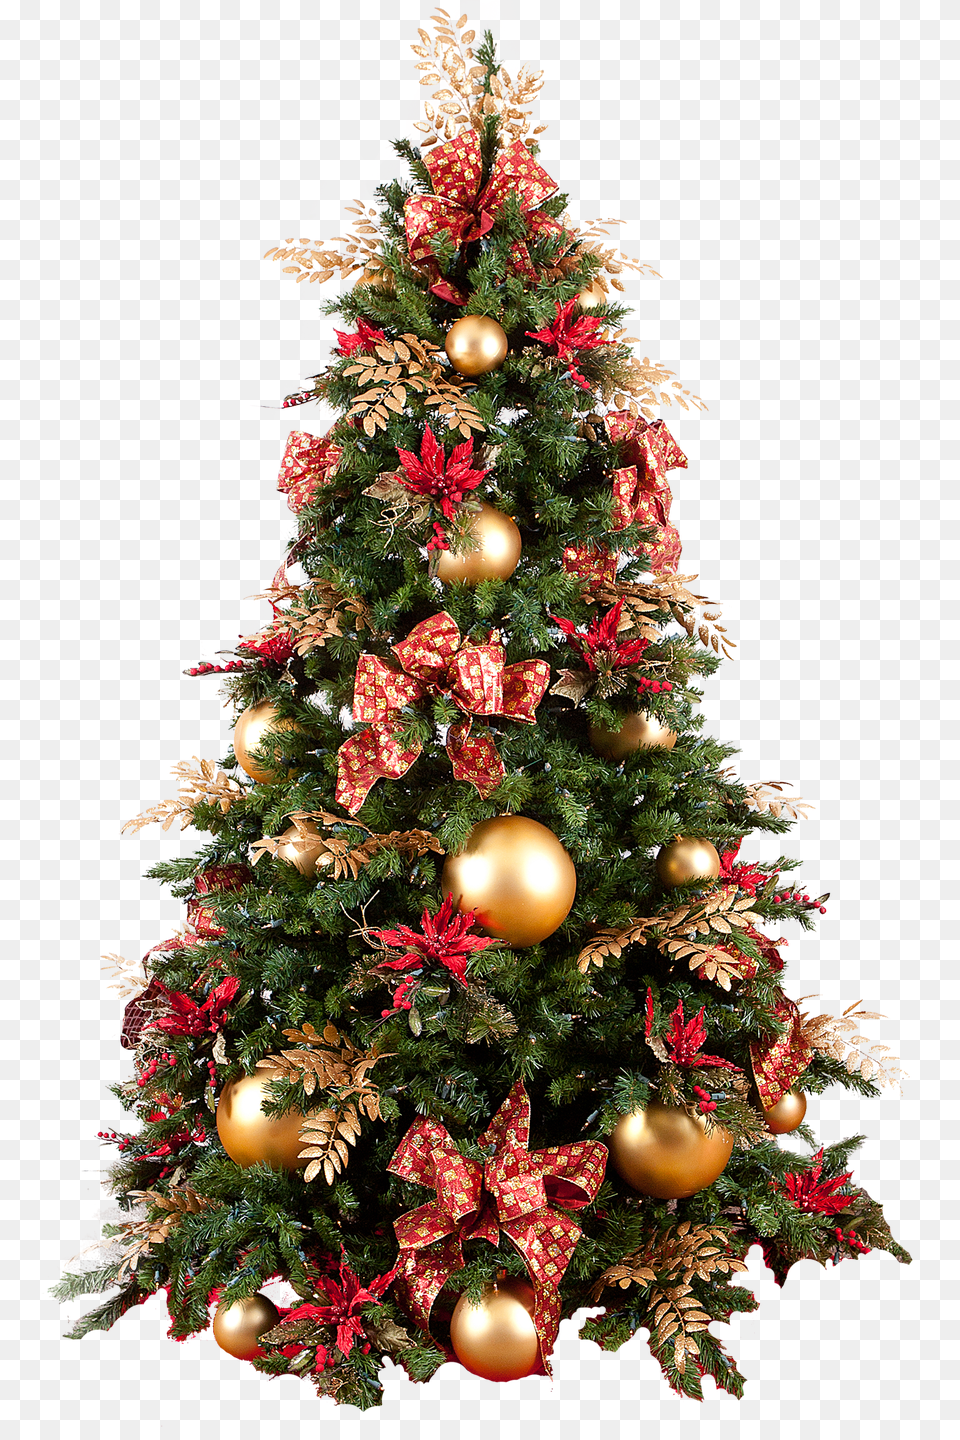 Christmas Tree No Background Christmas Tree With Skirt, Plant, Christmas Decorations, Festival, Christmas Tree Png Image